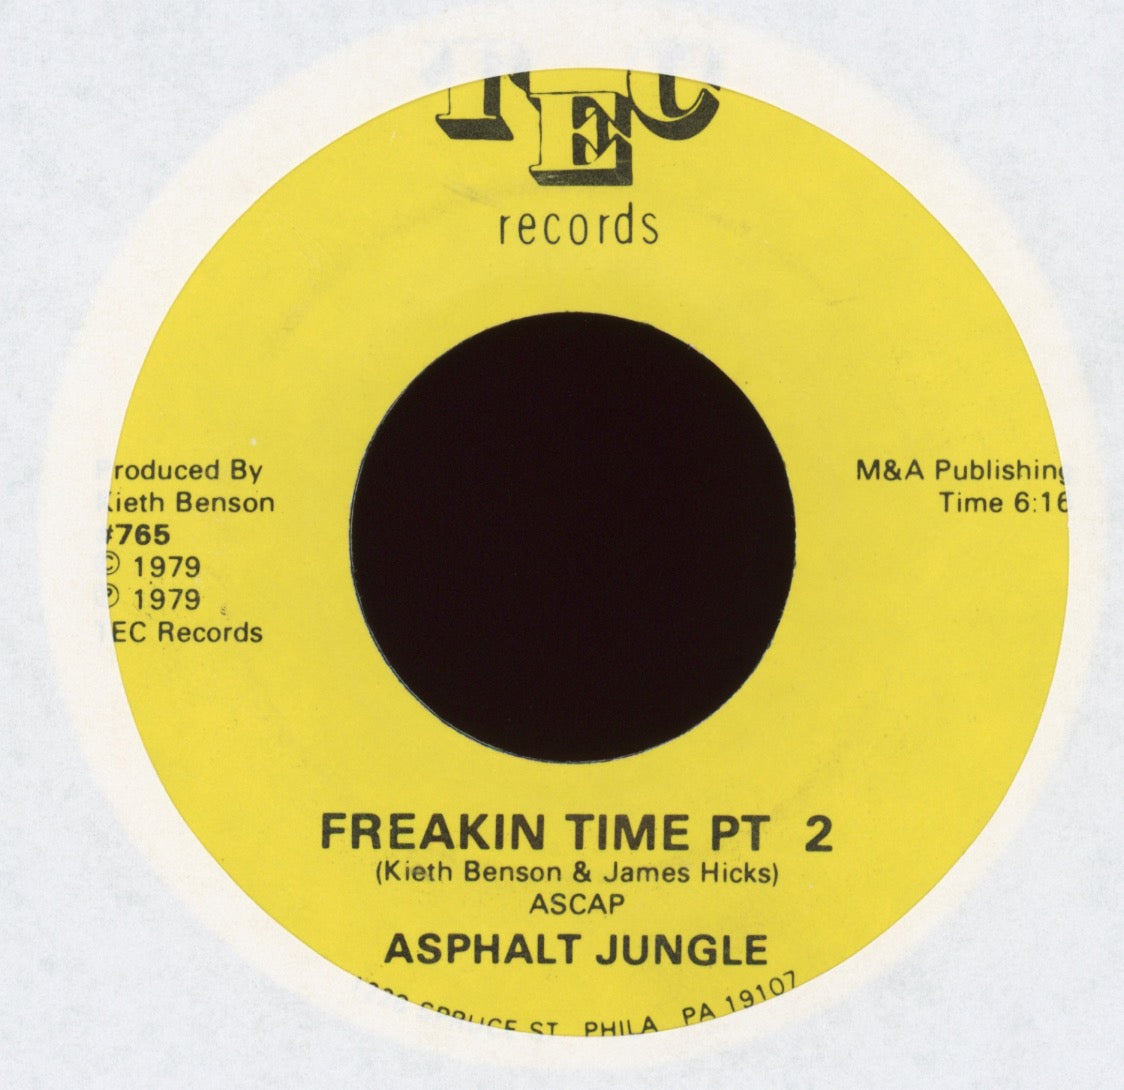 Asphalt Jungle - Freakin' Time on TEC